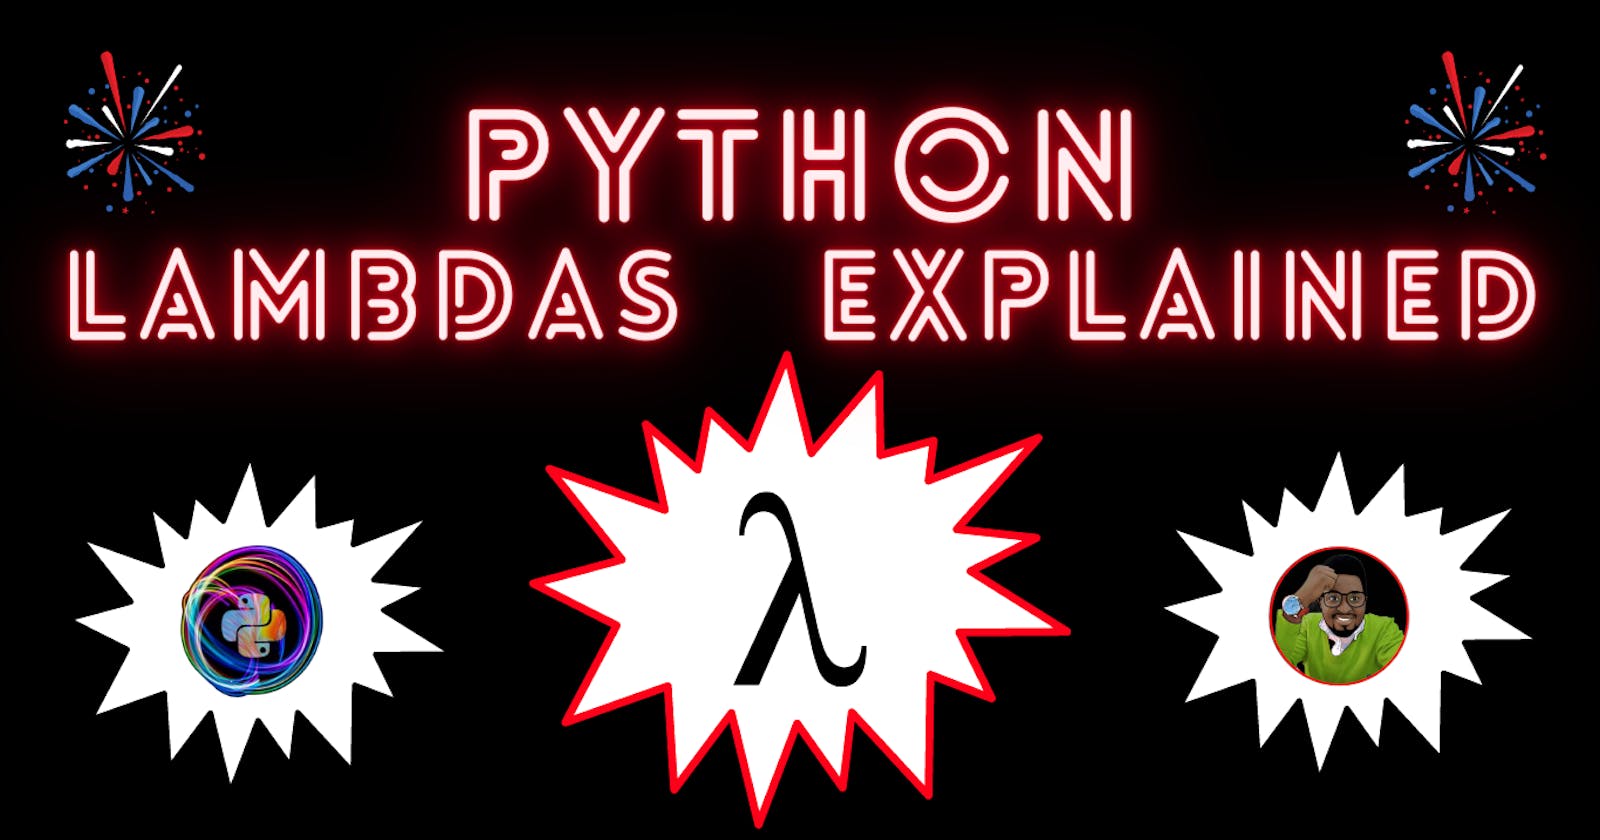 What Are Python Lambdas?